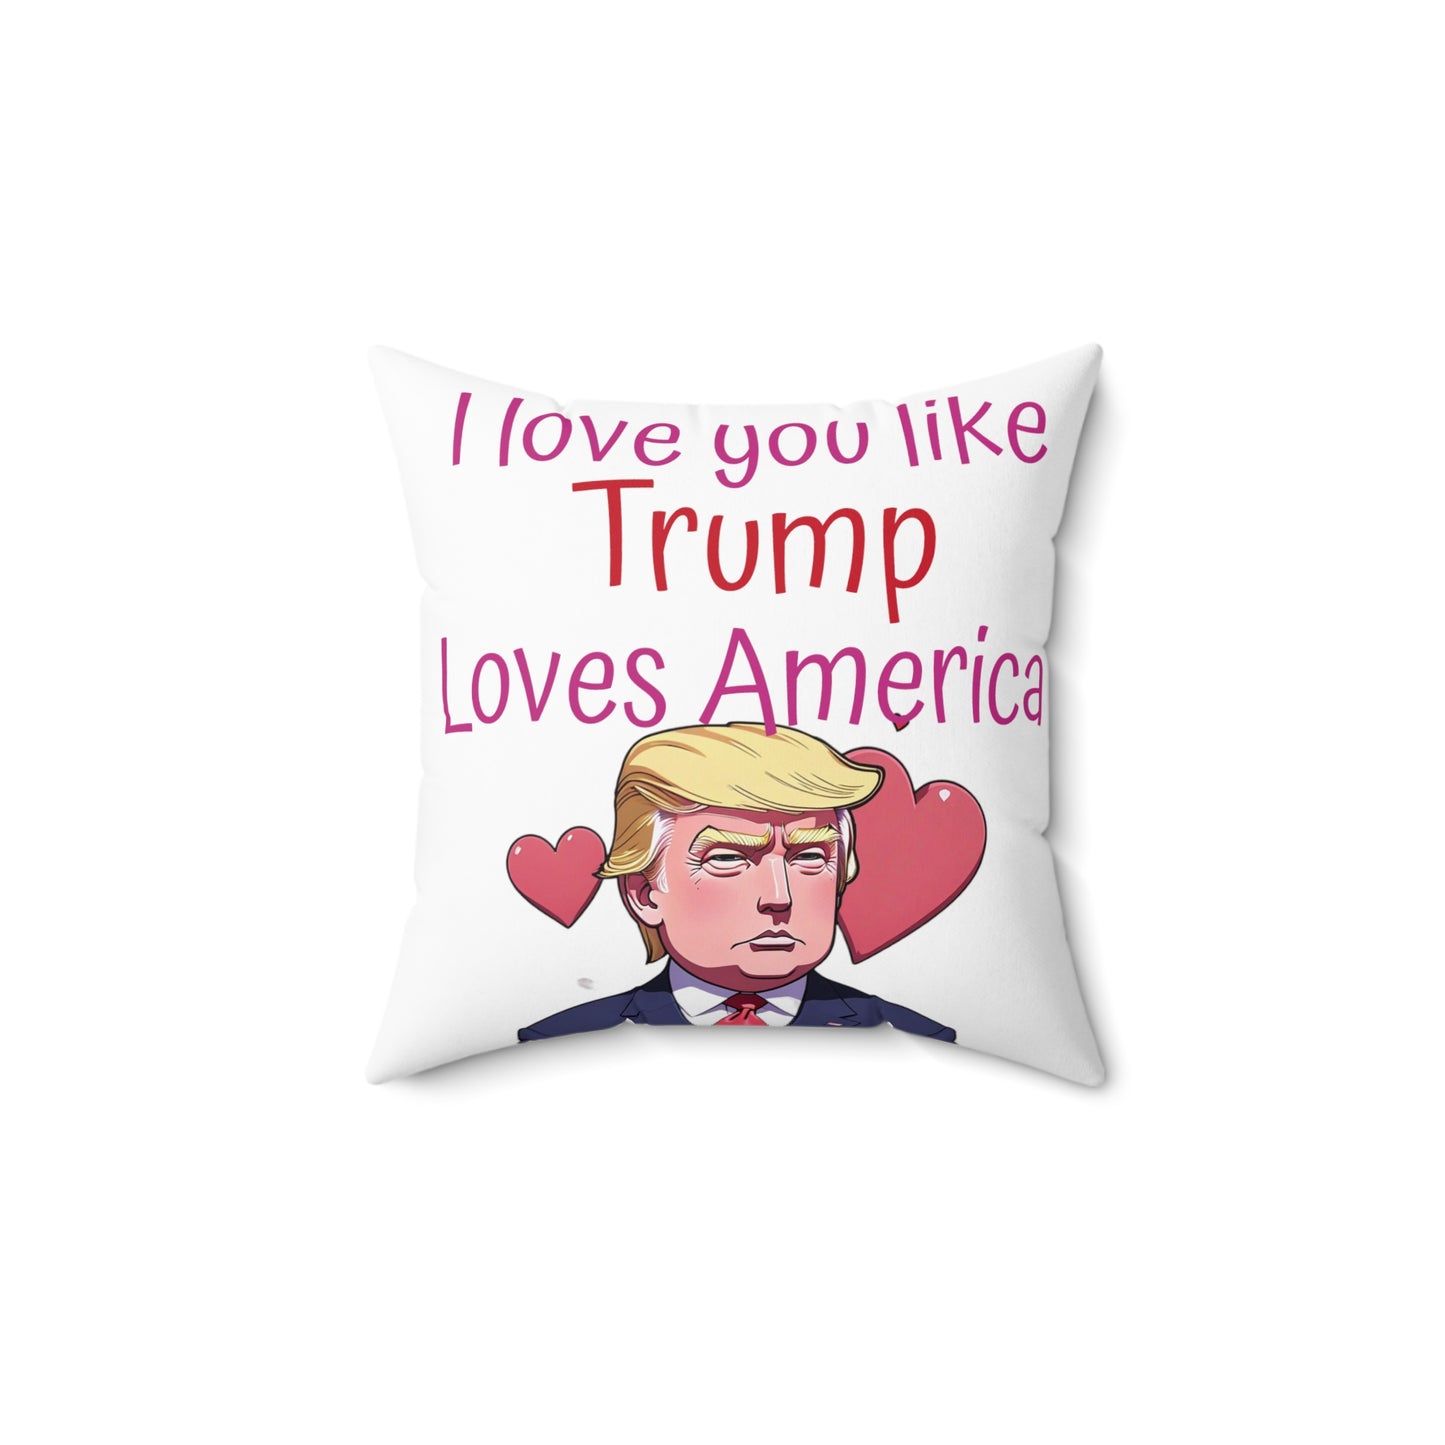 I love you like Trump loves America Spun Polyester Square Pillow